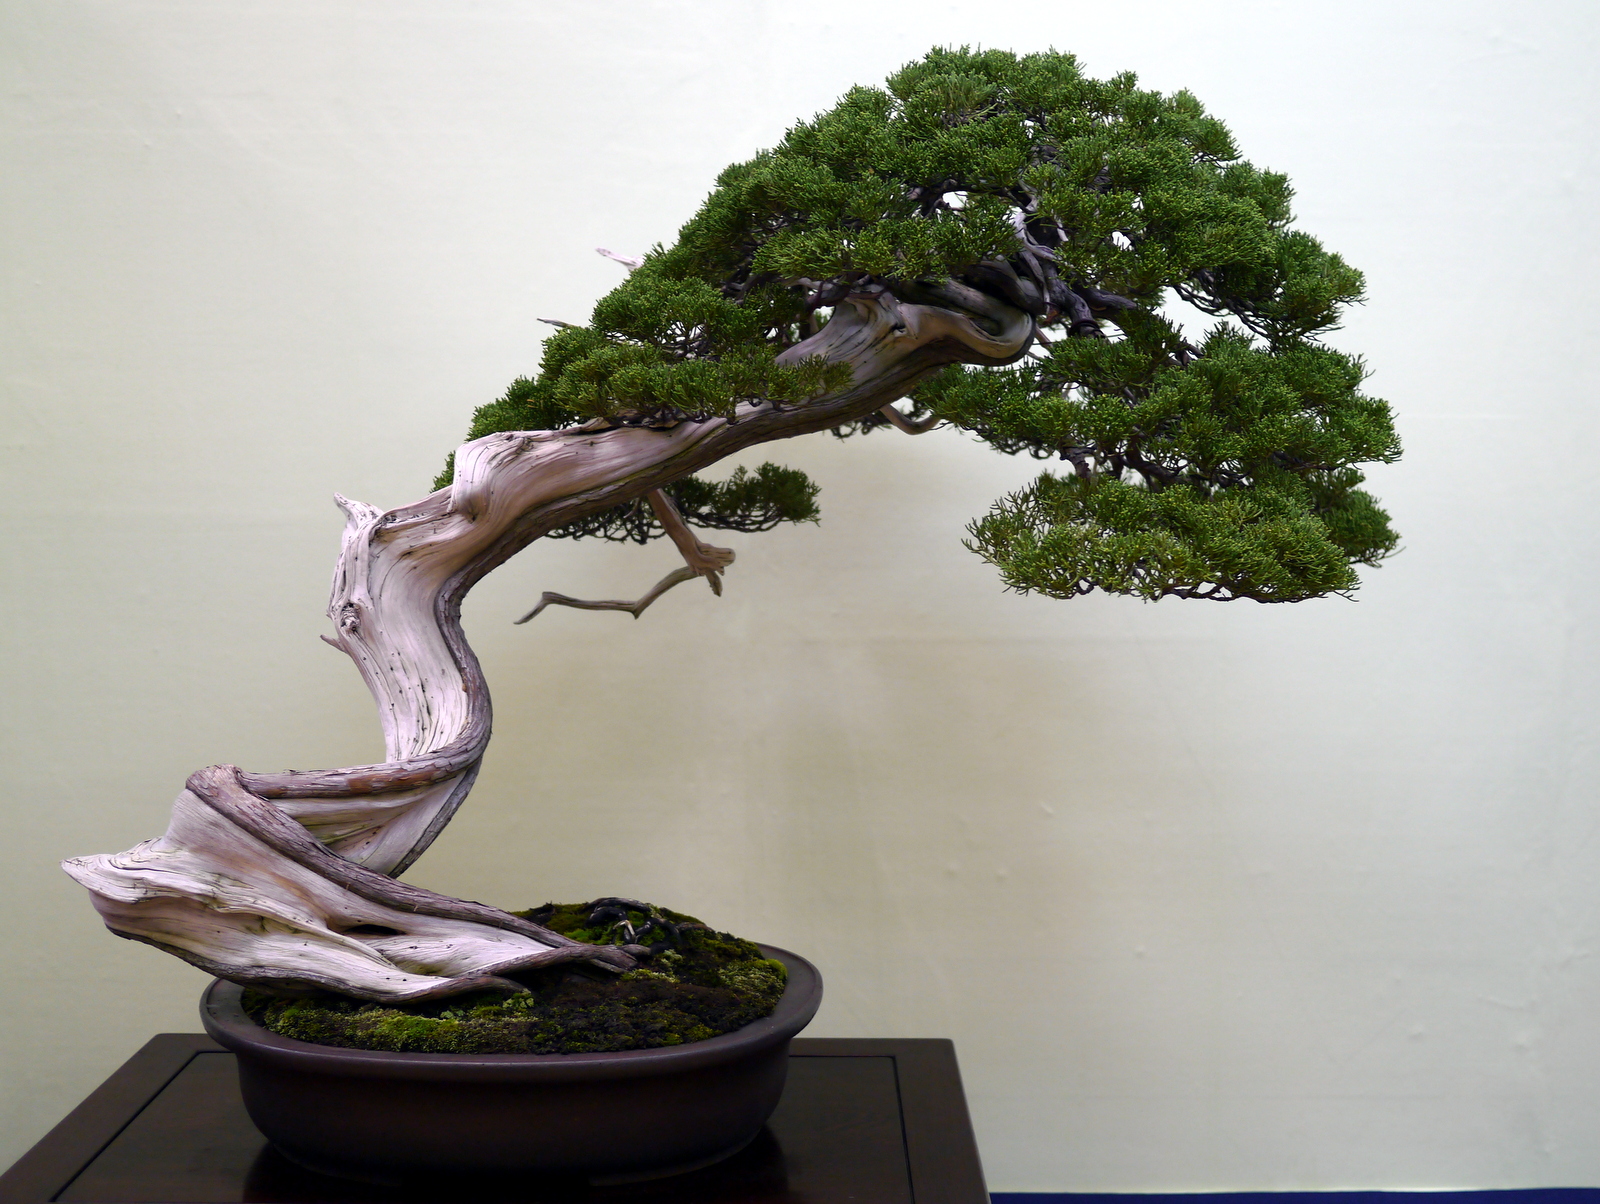 Chinese juniper bonsai photo